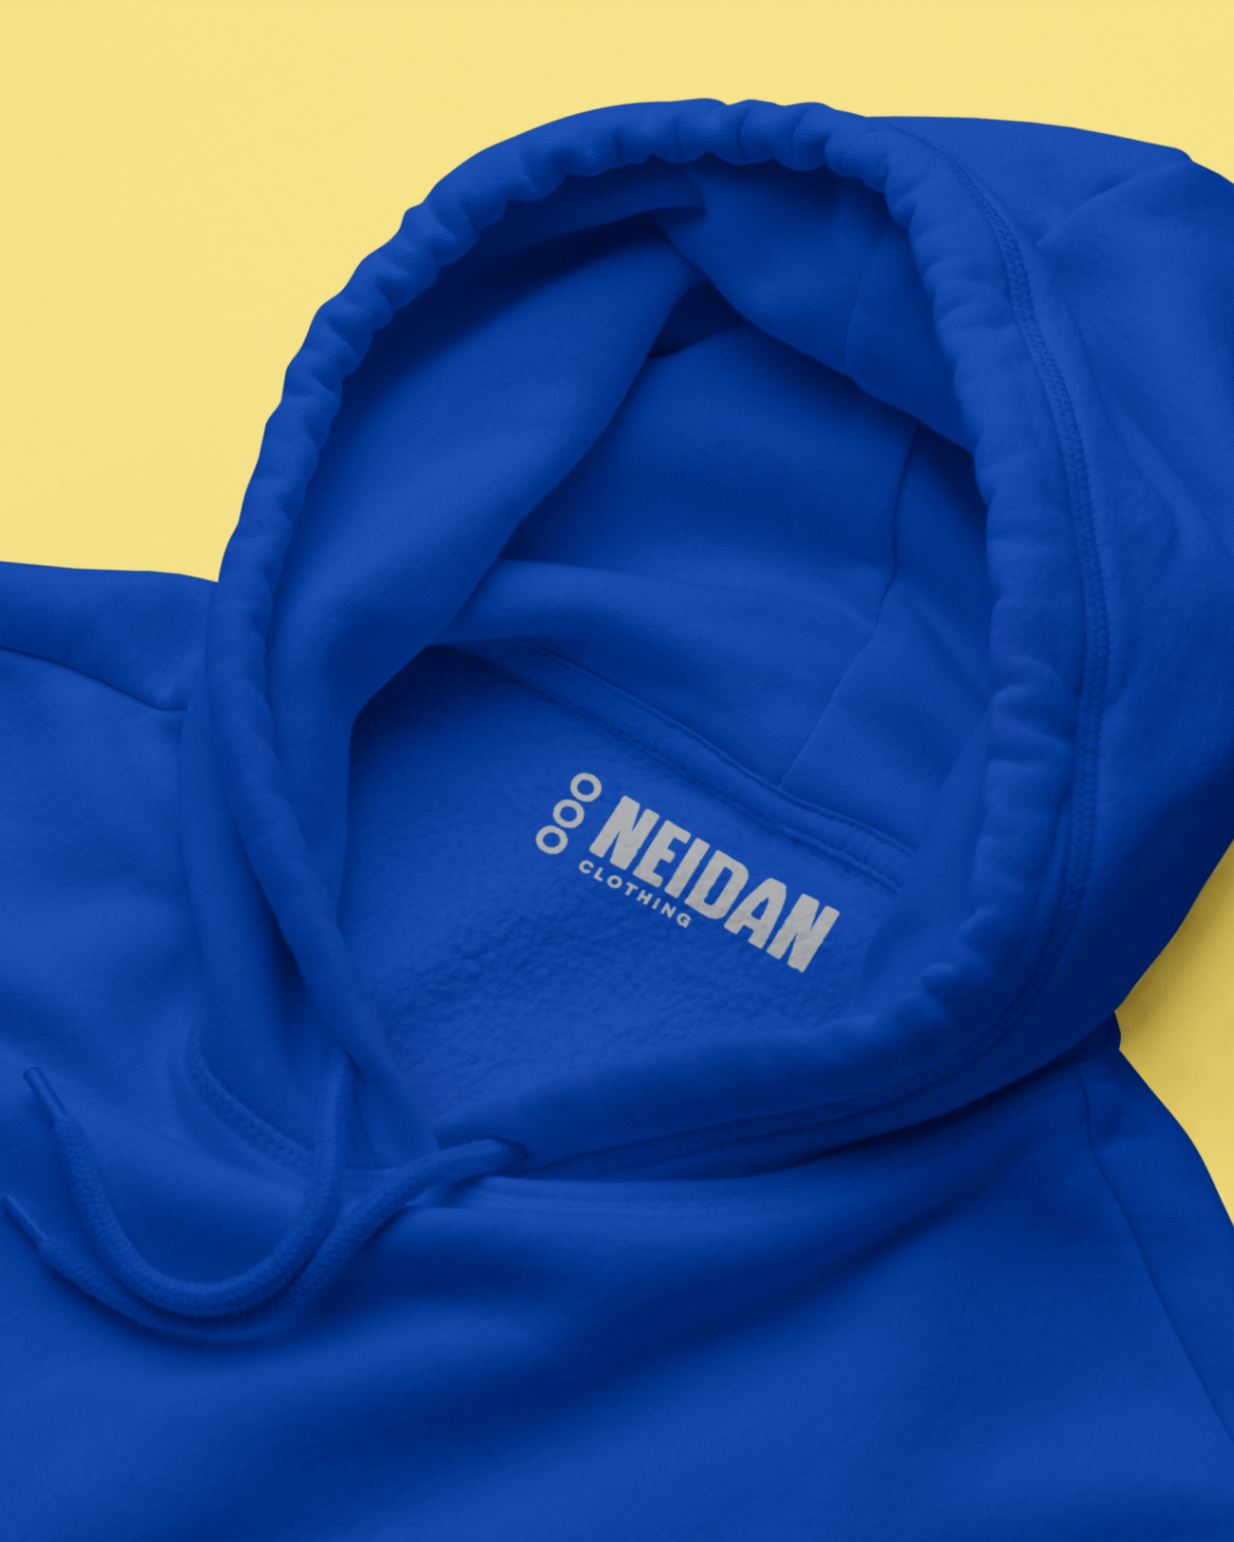  hoodie royal blue neidan clothing neck label